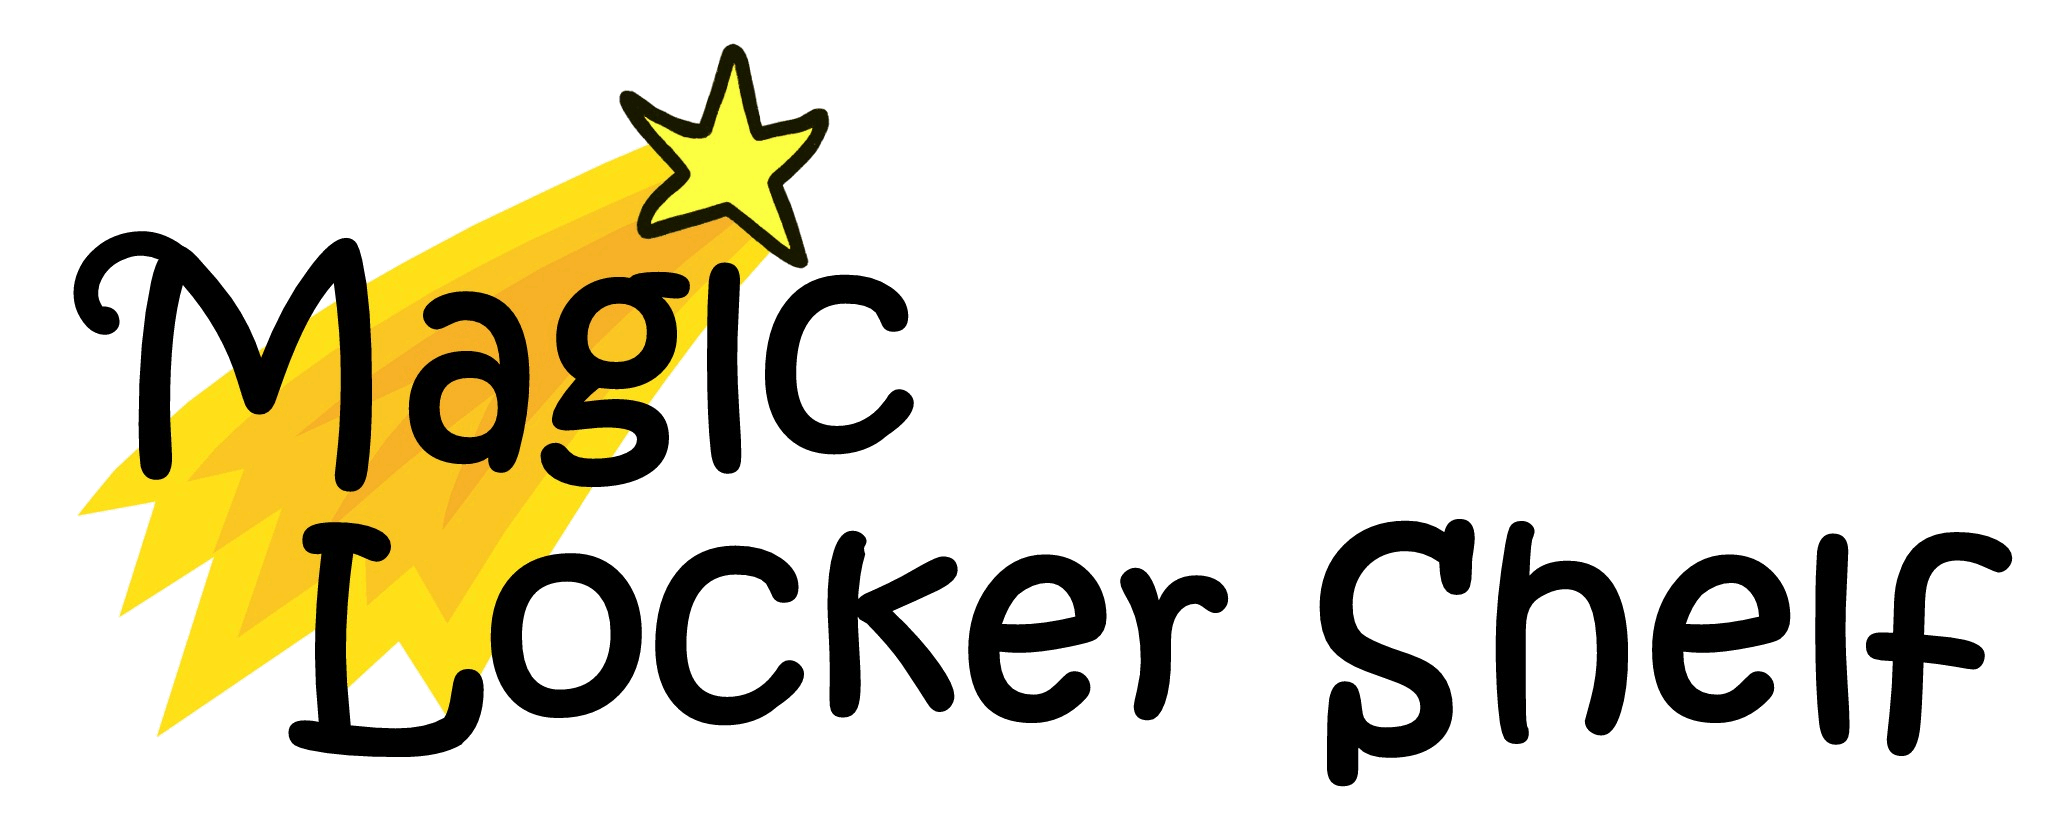 Magic Locker Shelf